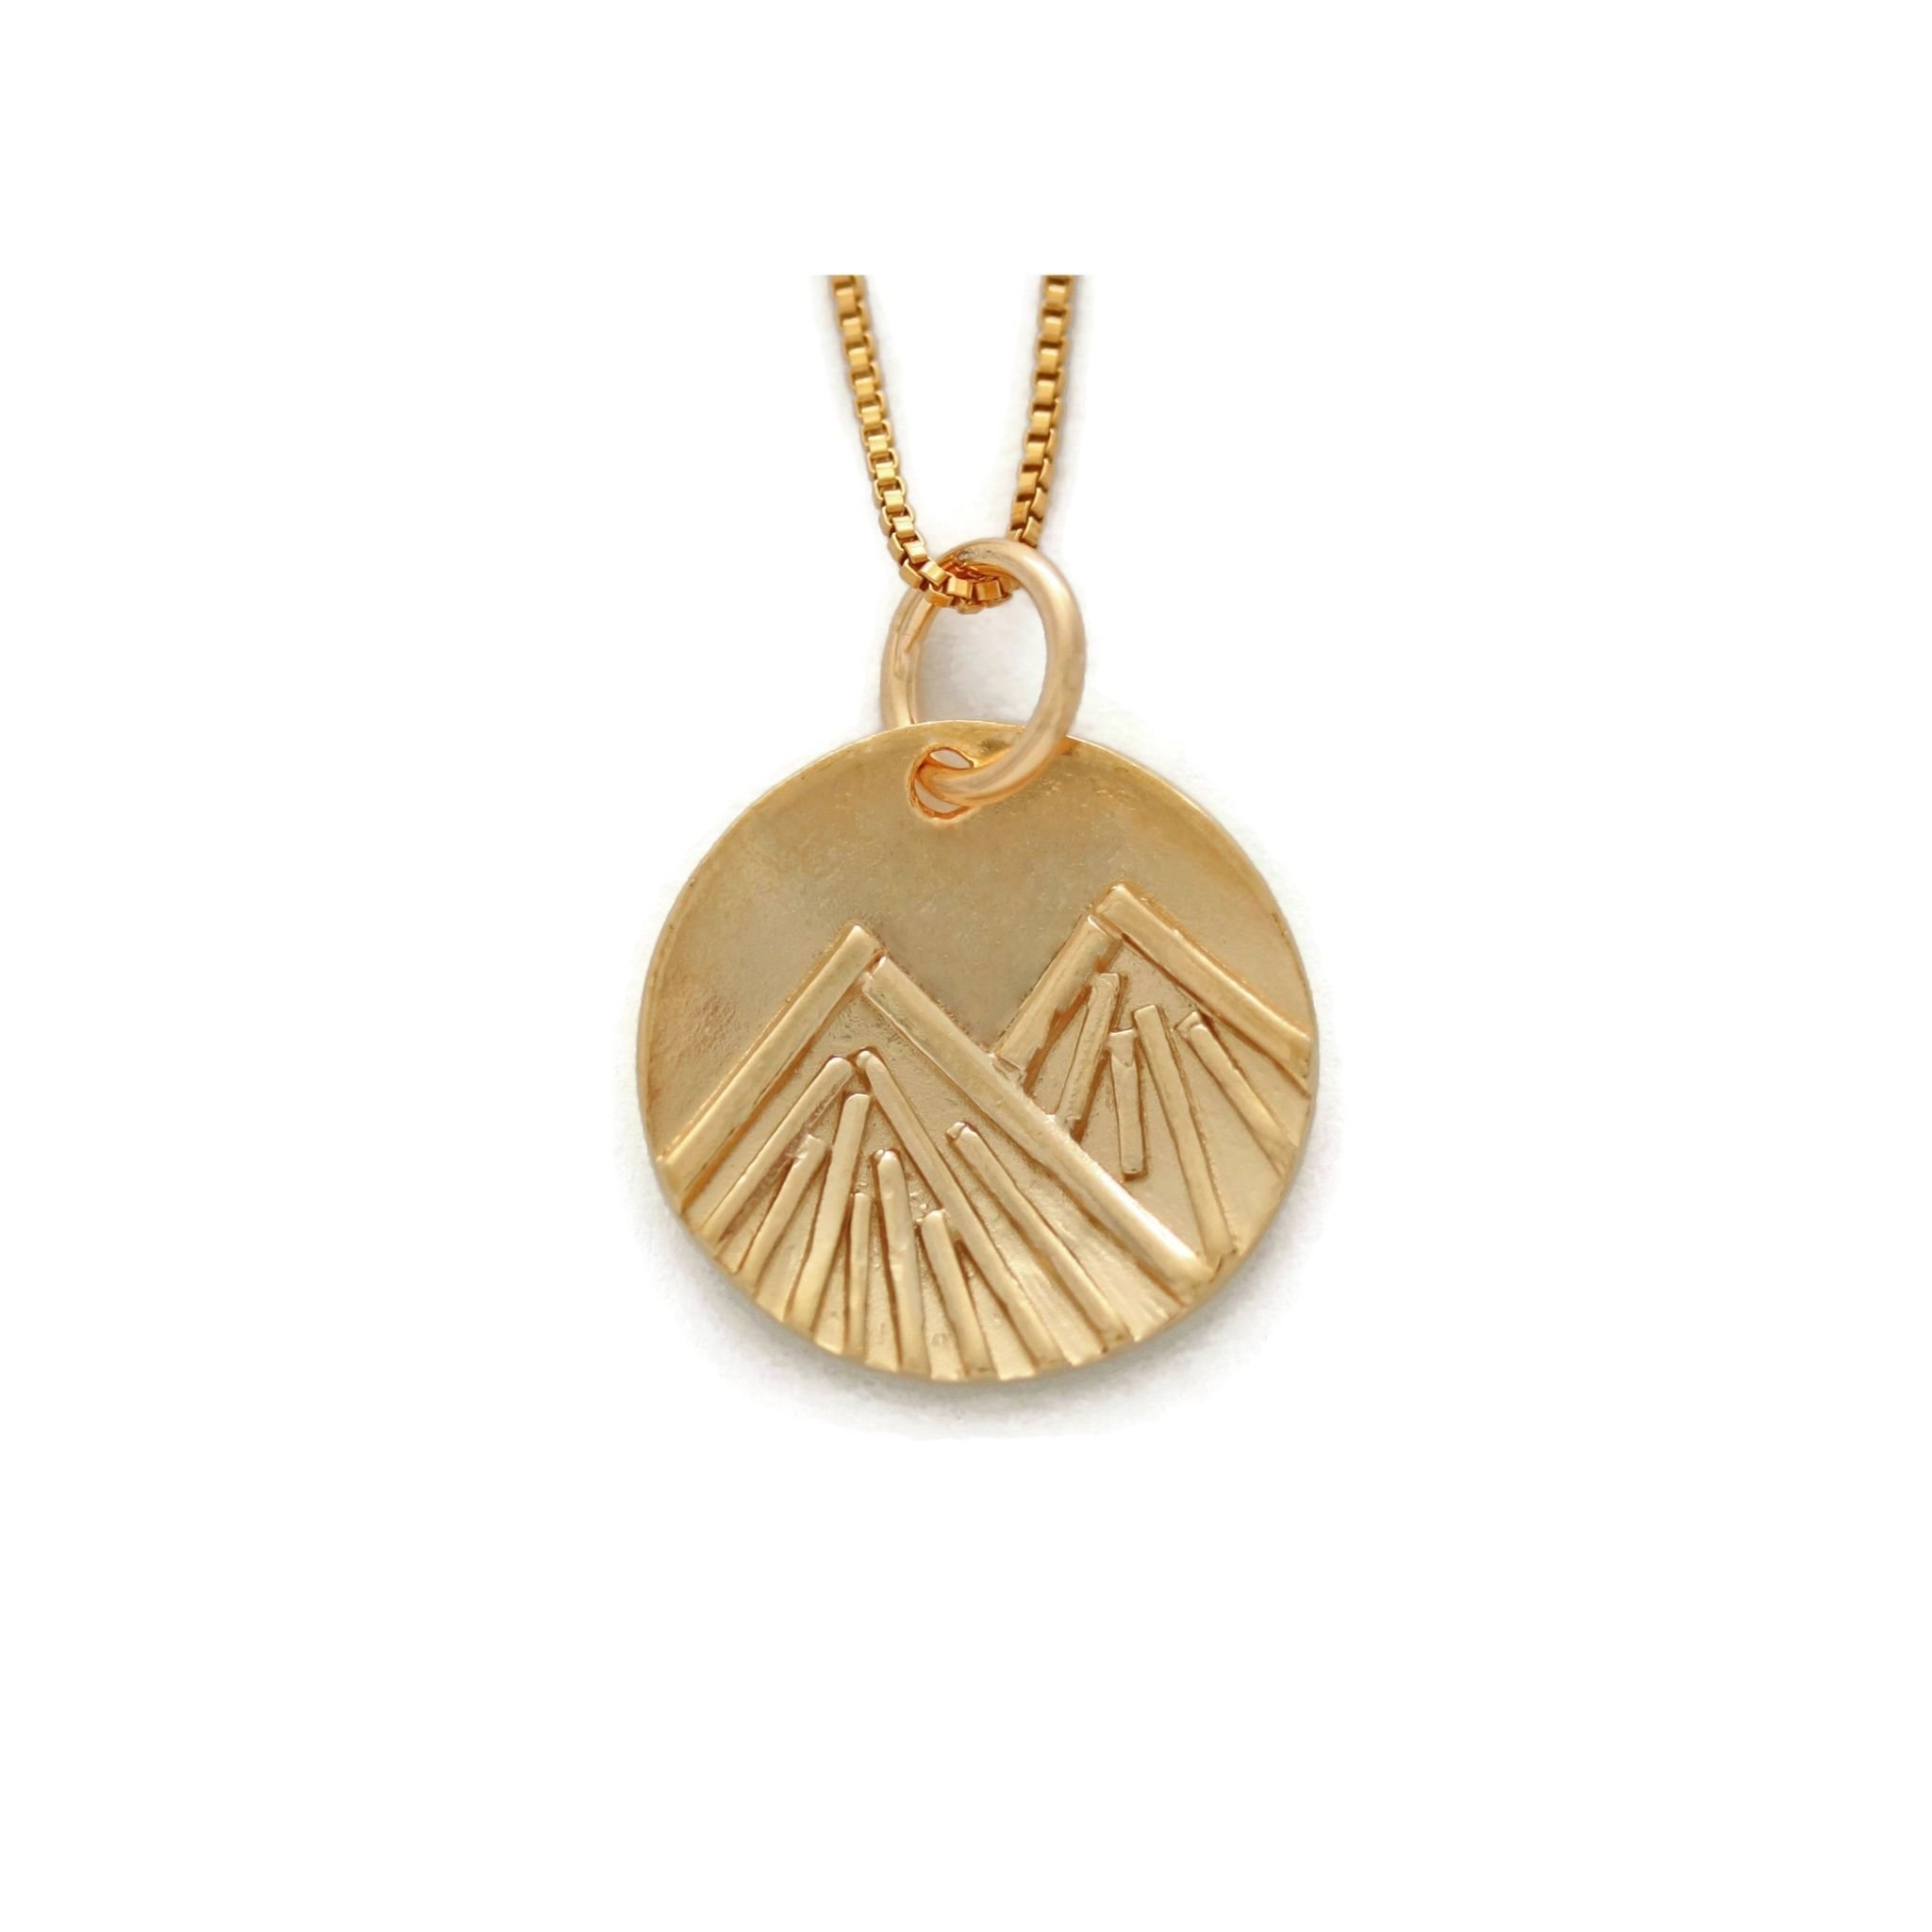 Winter Mountain Gold Vermeil Pendant on 16-18” Chain